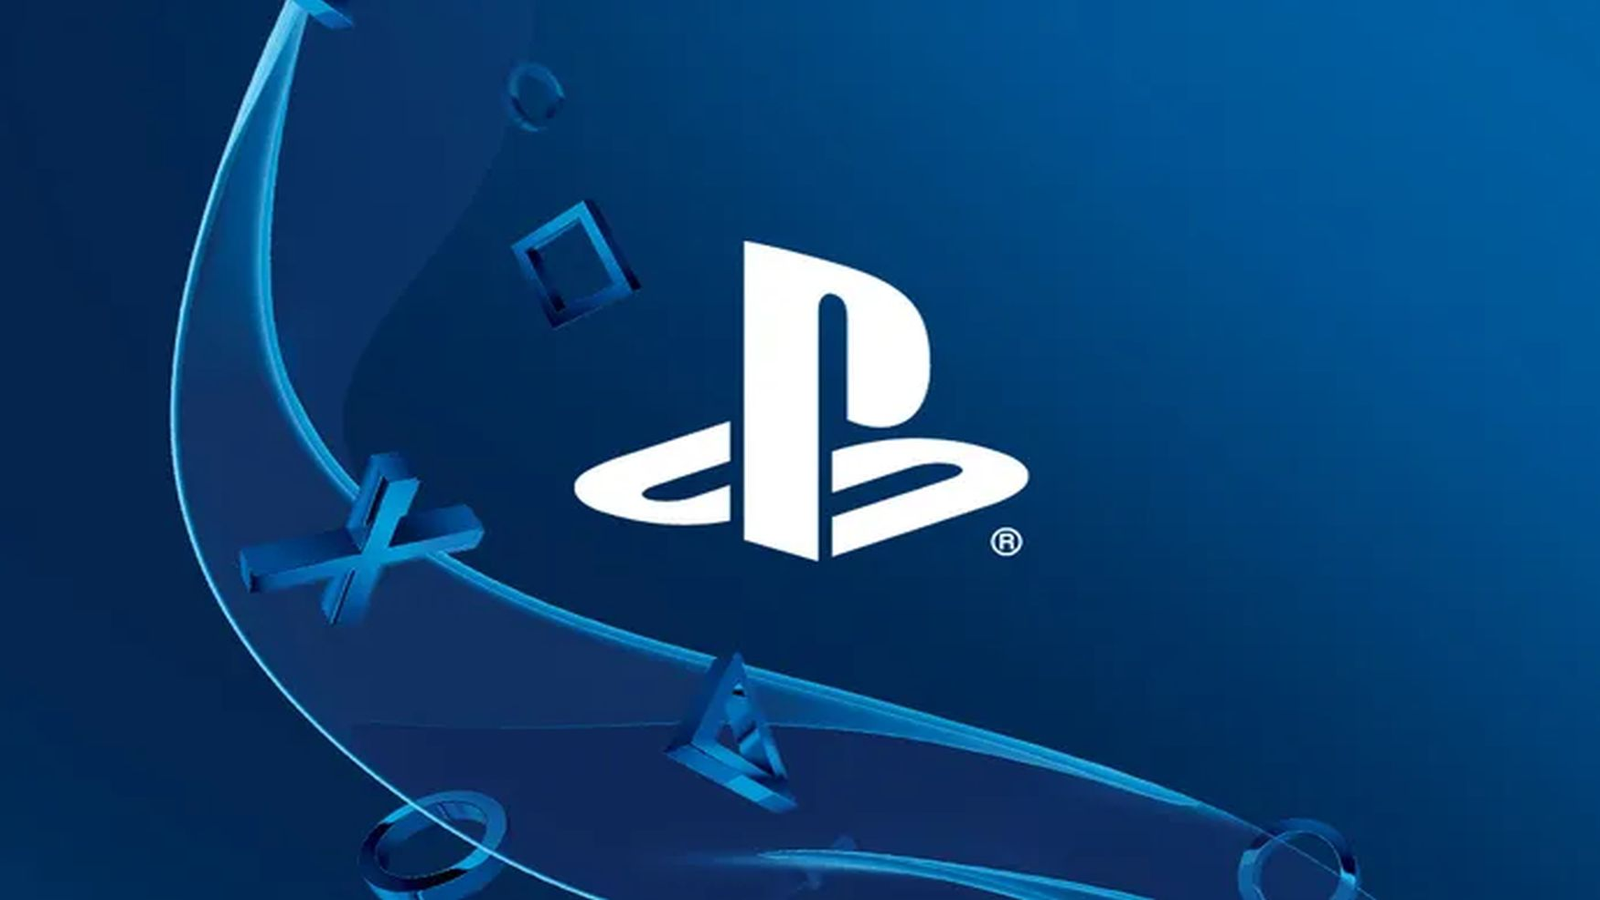 PlayStation Showcase on May 24 announced - GadgetMatch